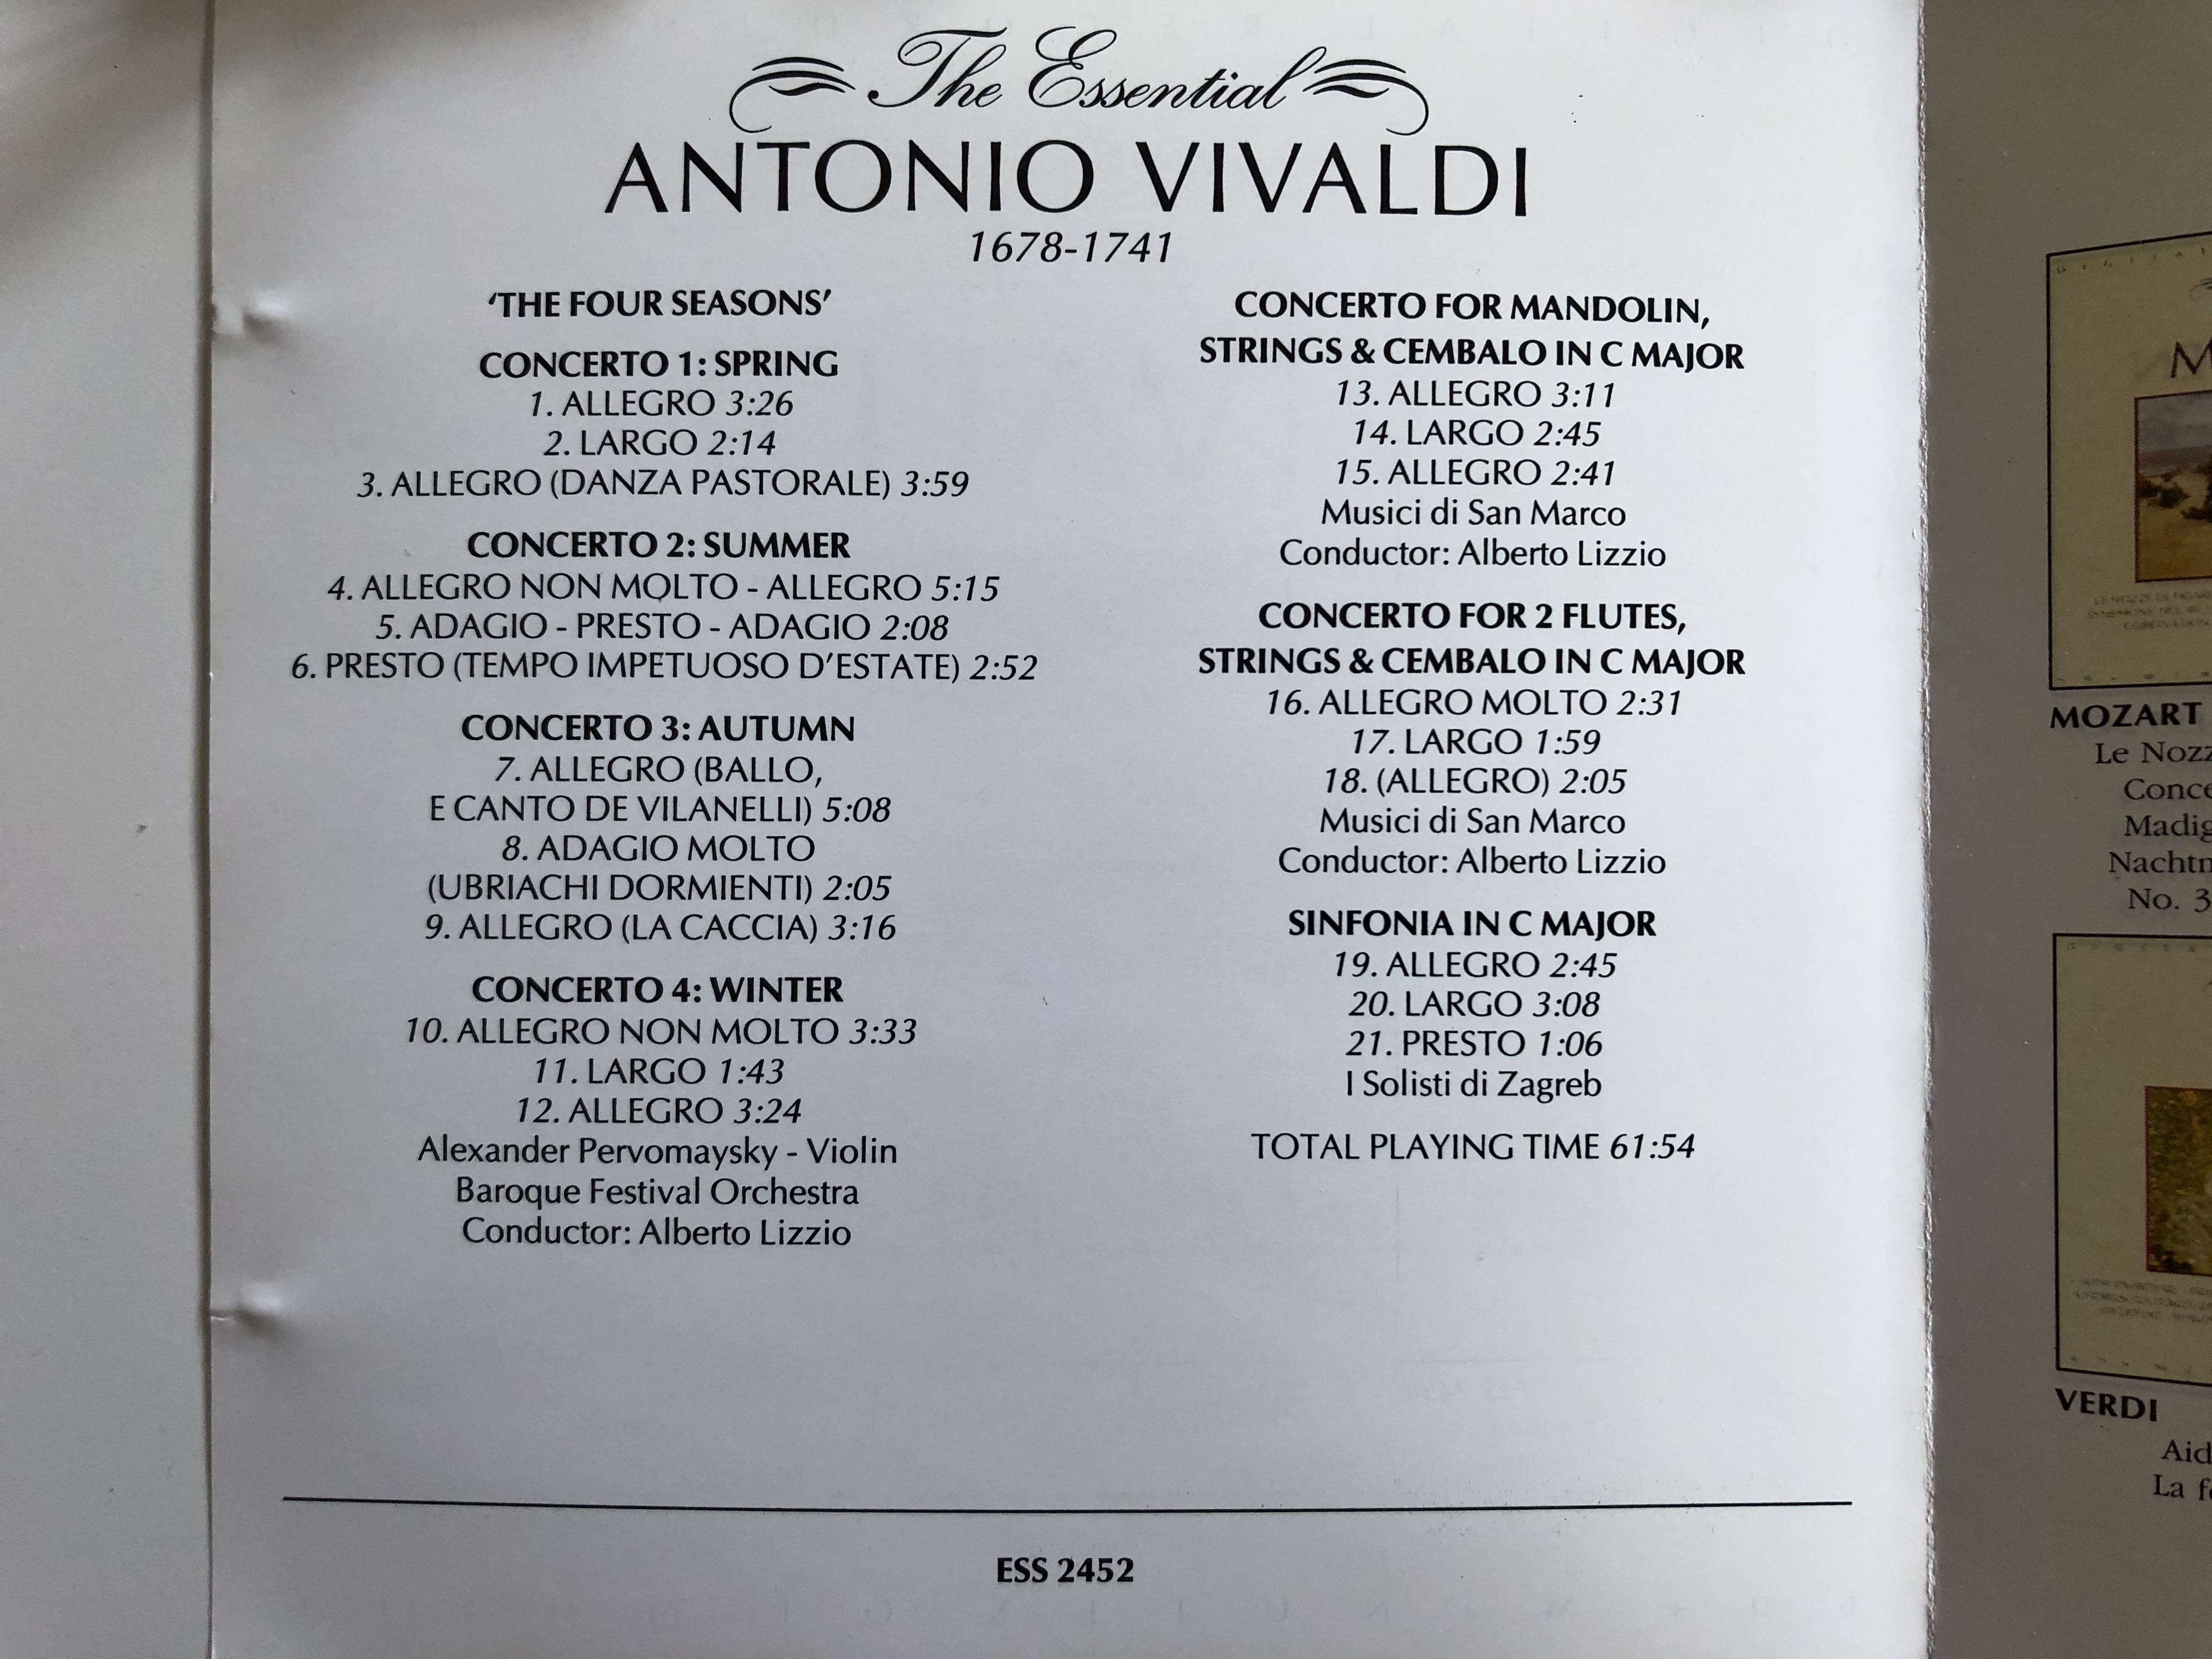 vivaldi-the-four-seasons-concerto-for-mandolin-concerto-for-2-flutes-sinfonia-in-c-major-the-essential-audio-cd-1992-stereo-ess-2452-2-.jpg